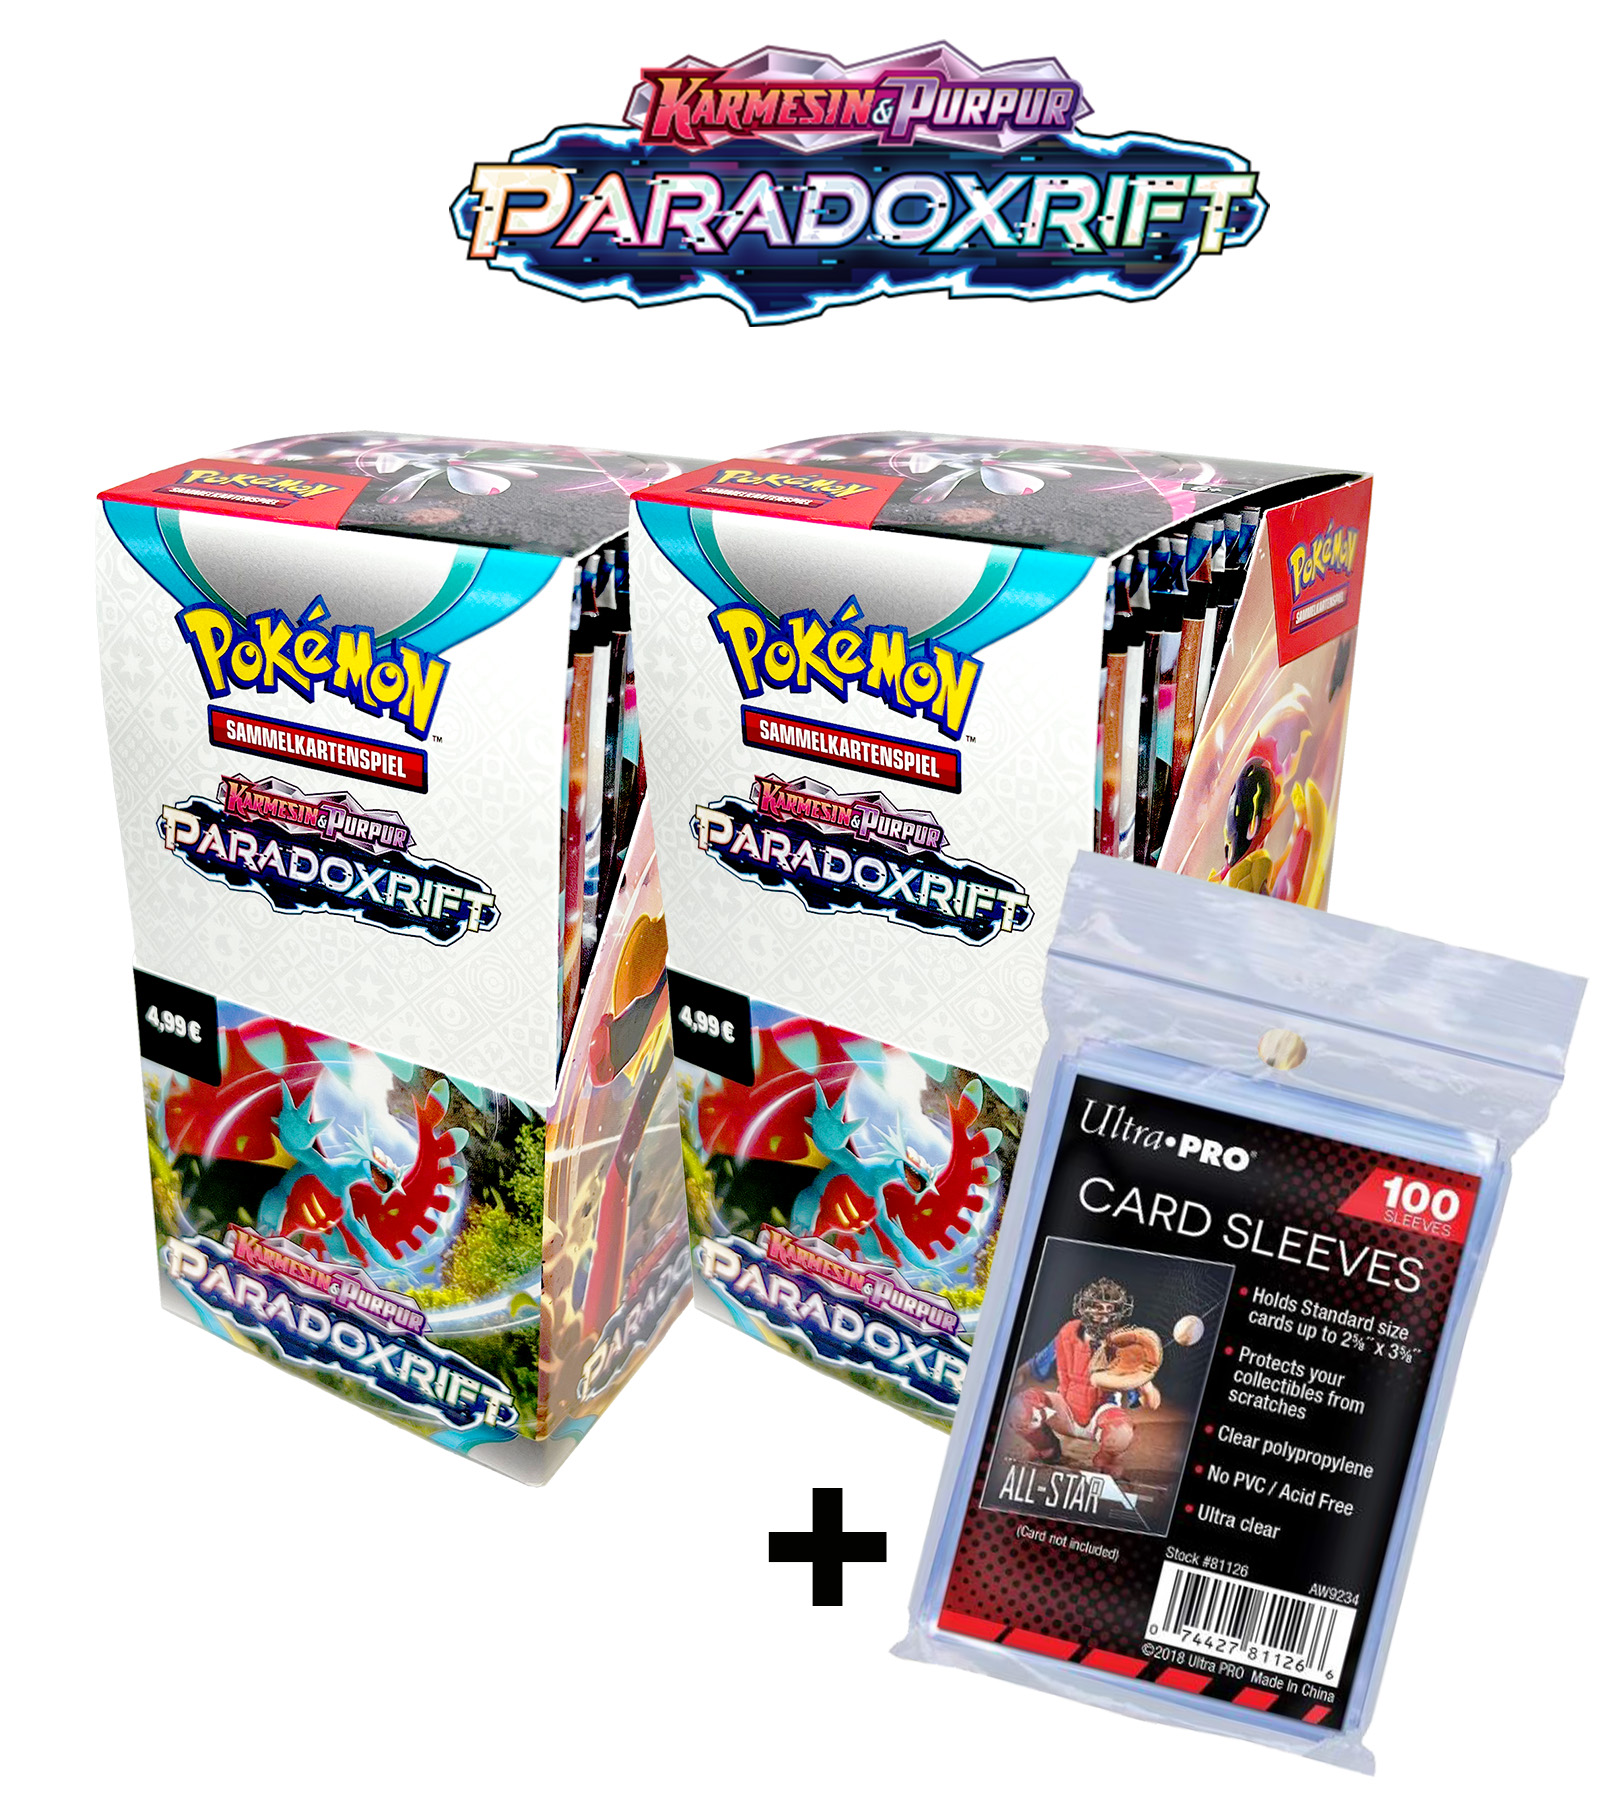 Pokémon Double Bundle "Paradoxrift" - 2 Displays mit je 18 Boosterpacks  + Ultra Pro Soft Sleeves (100er Packung)